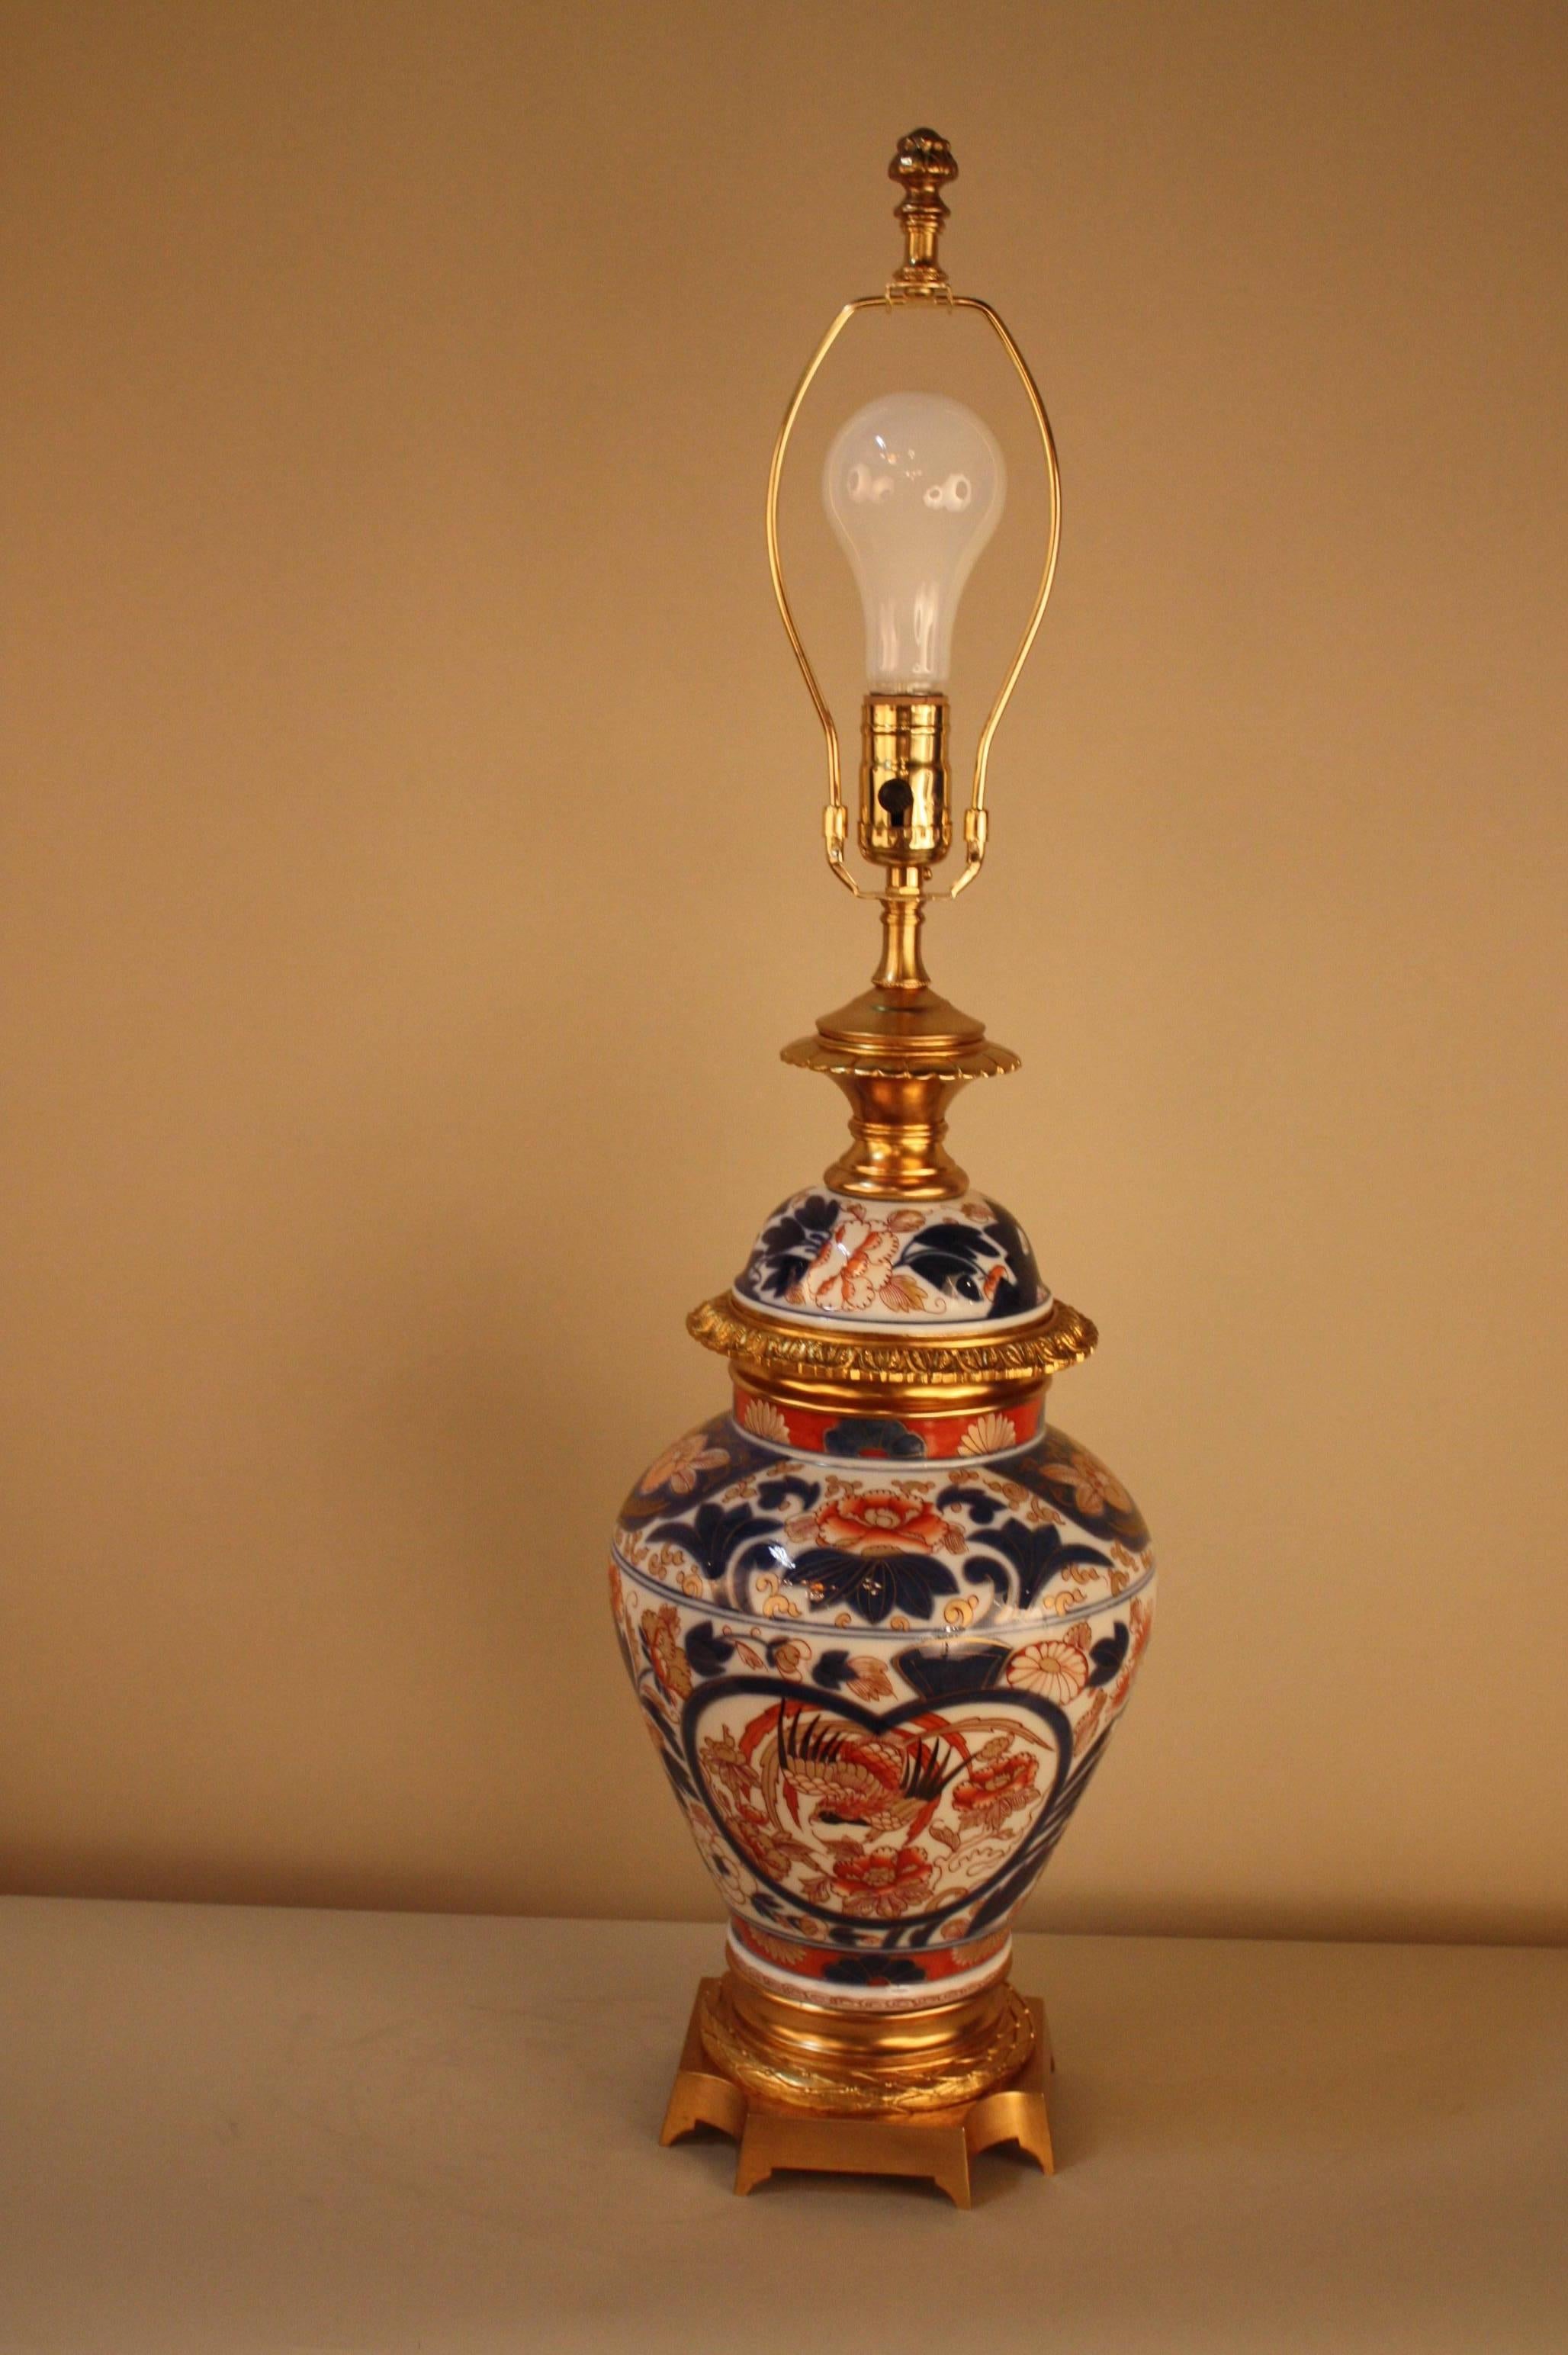 Japanese 19th Century Imari Porcelain and Gilt Bronze-Mounted Electrified Oil Lamp